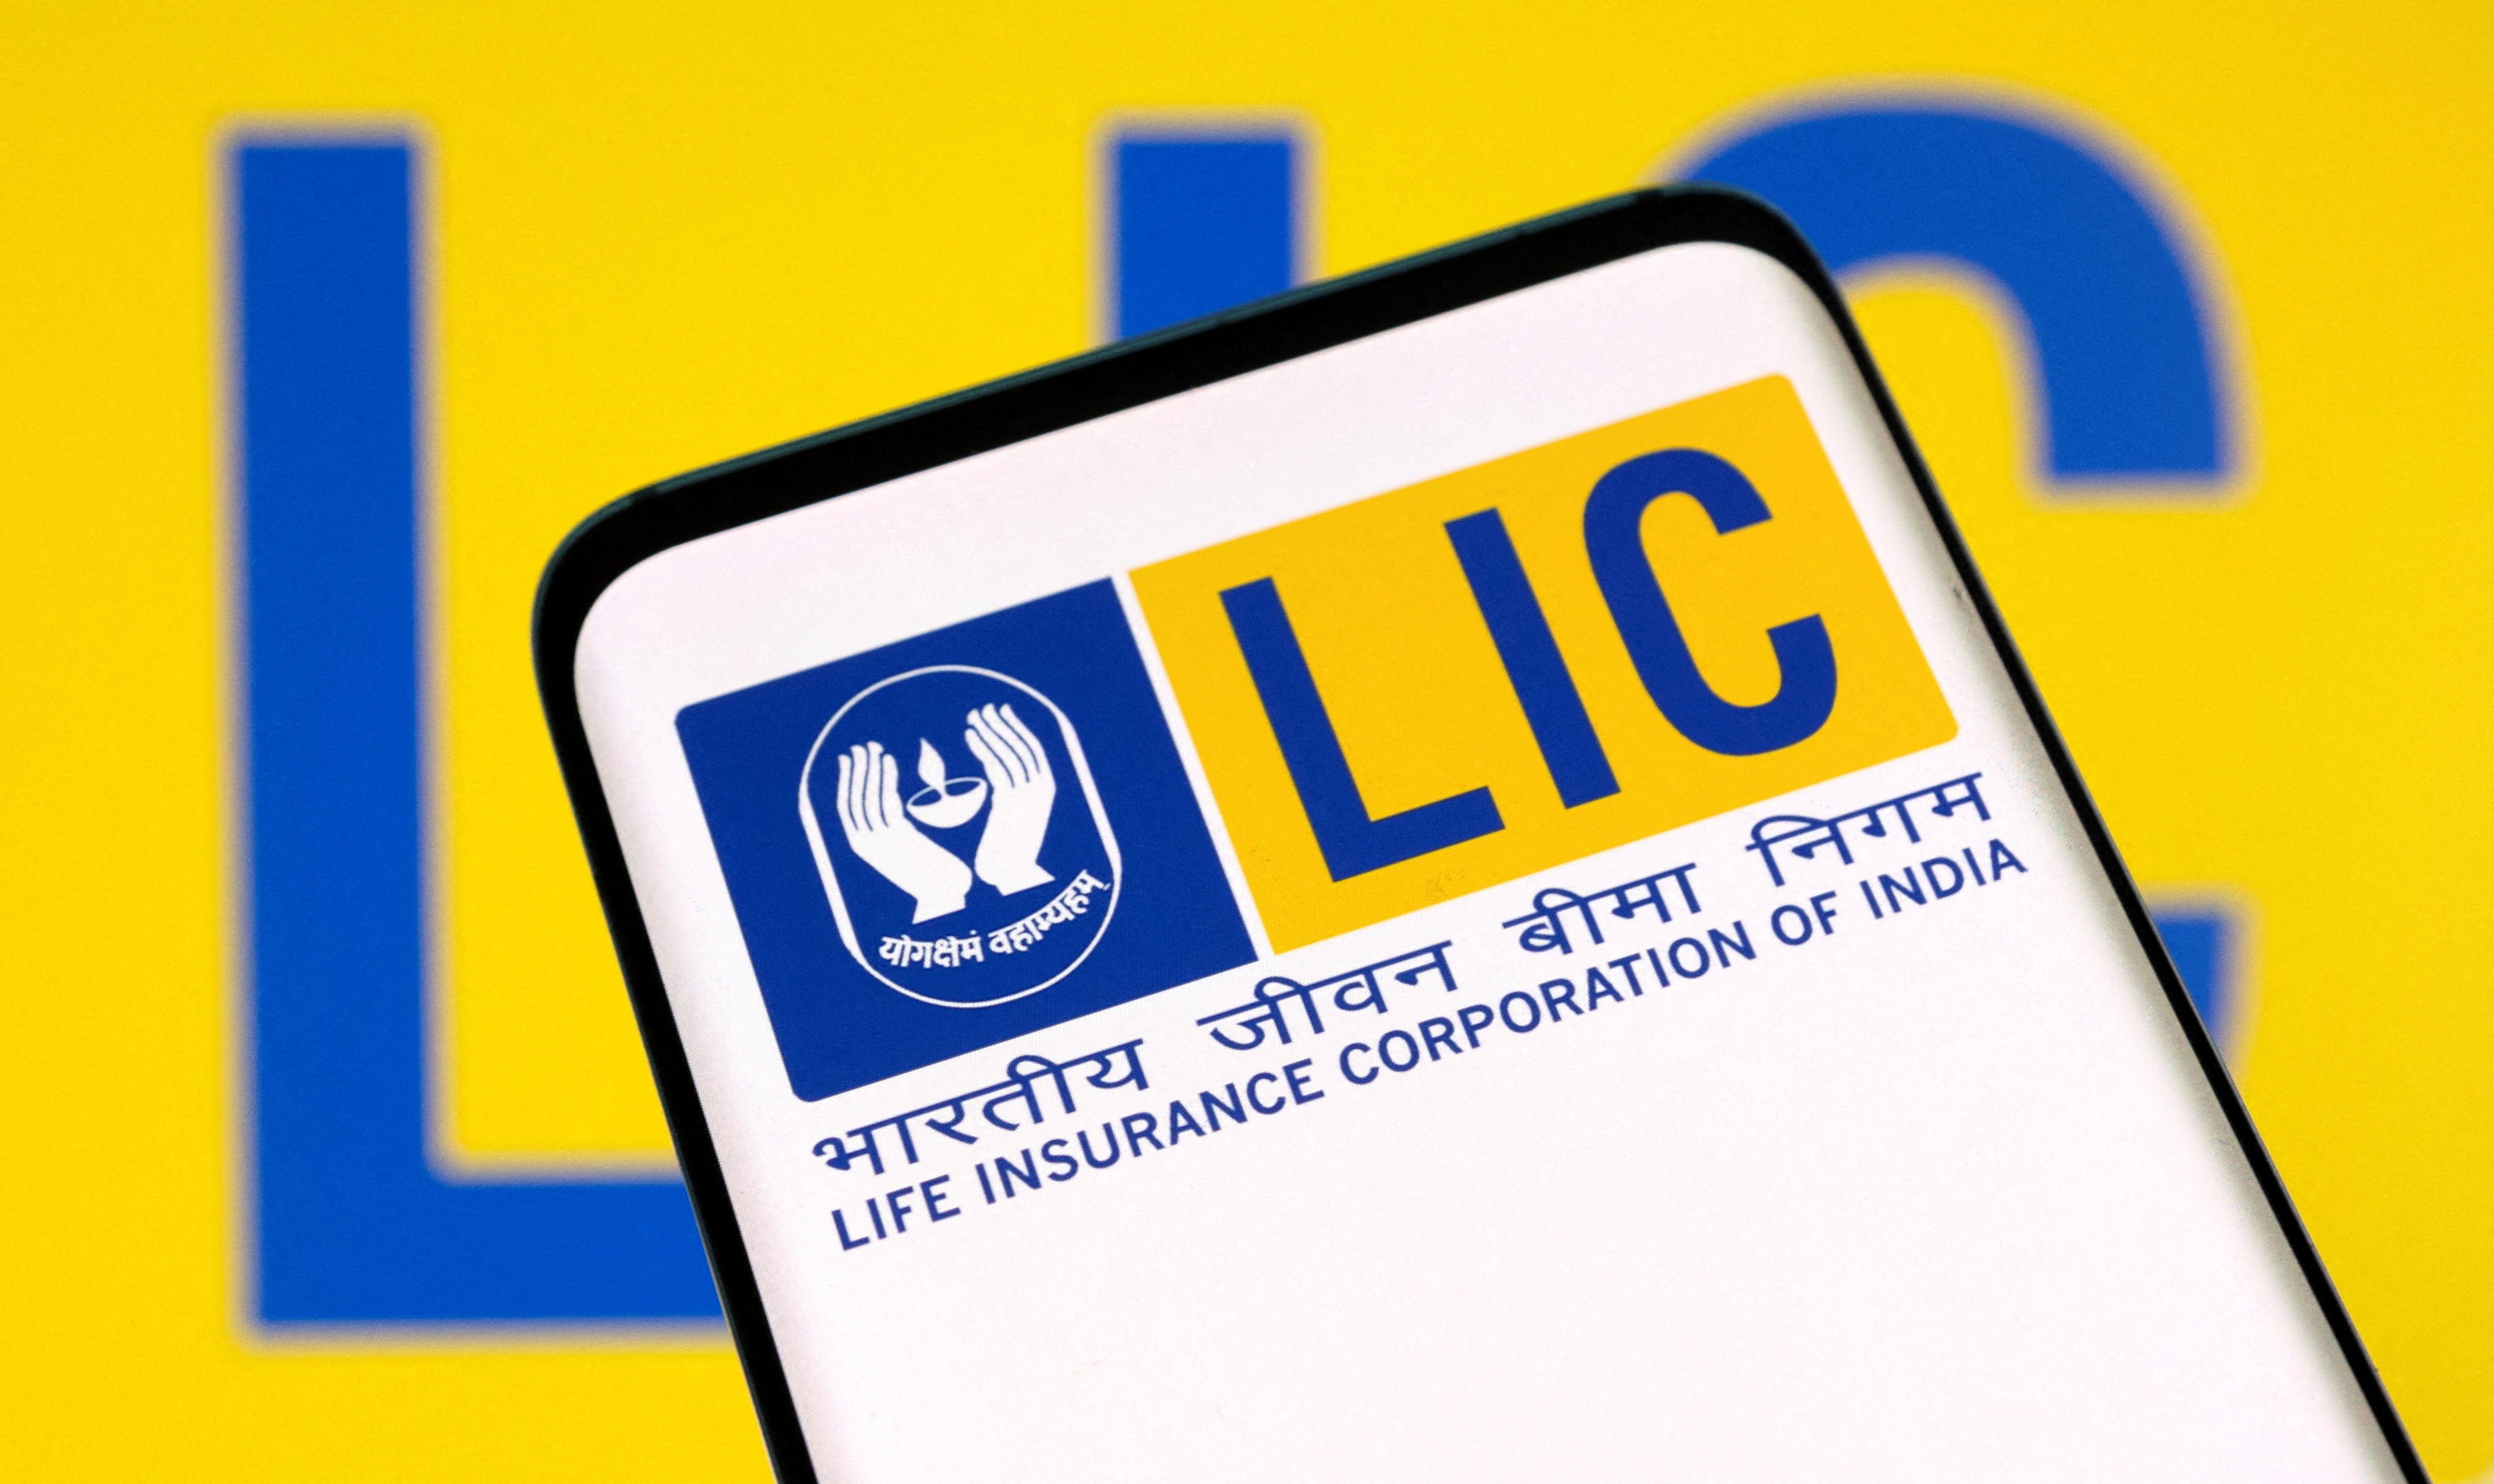 Illustration shows LIC (Life Insurance Corporation of India) logo